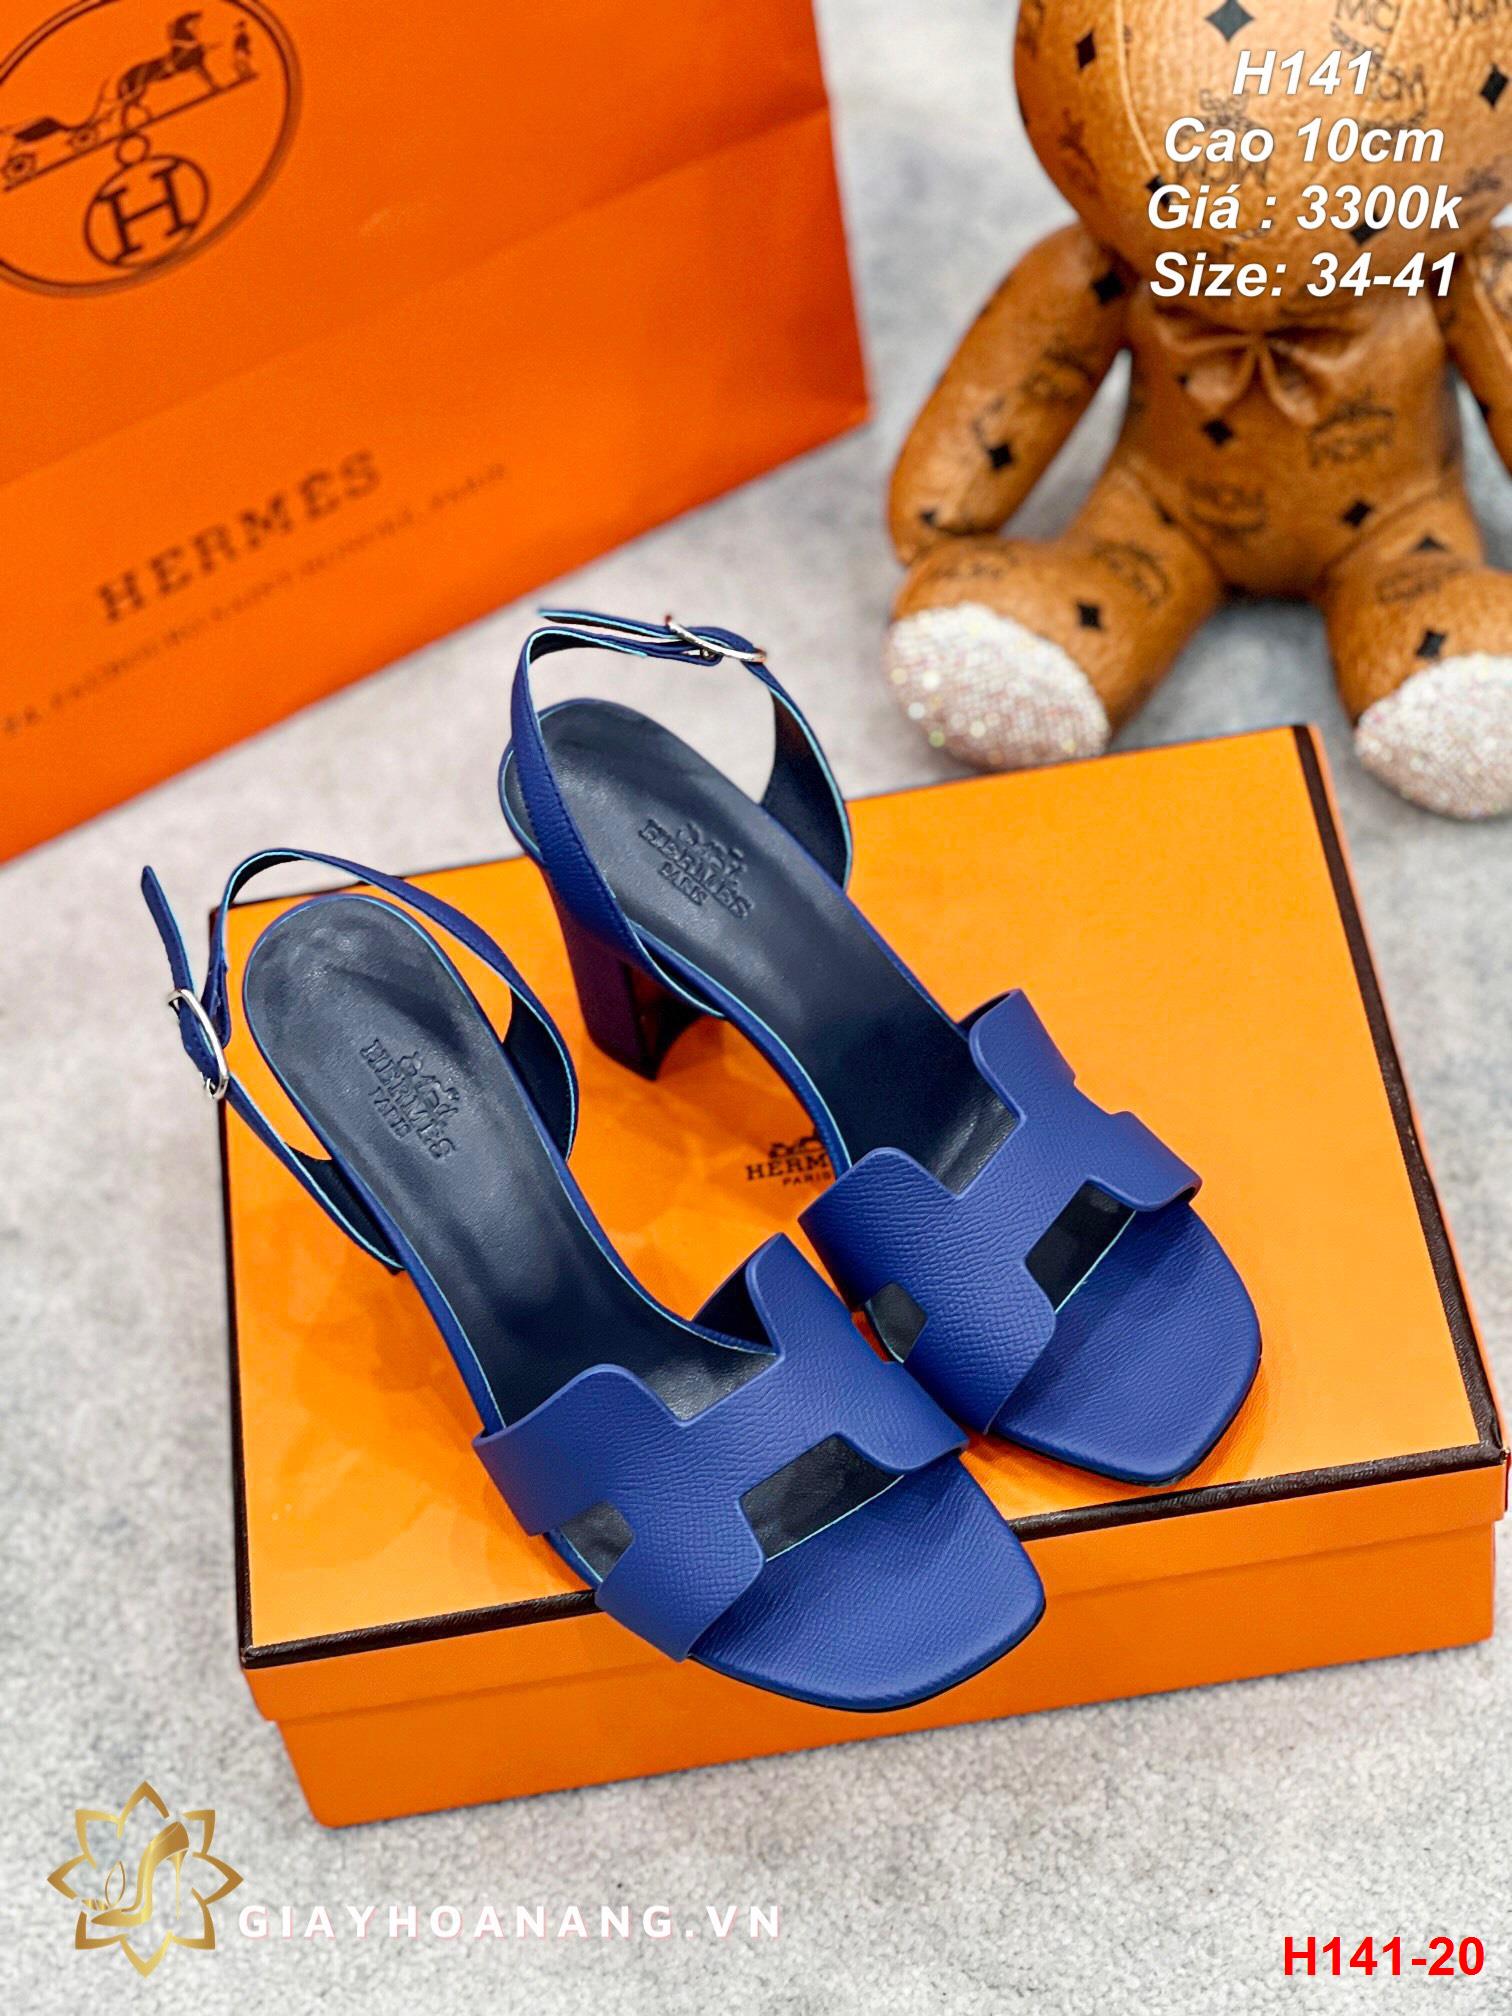 H141-20 Hermes sandal cao 10cm siêu cấp